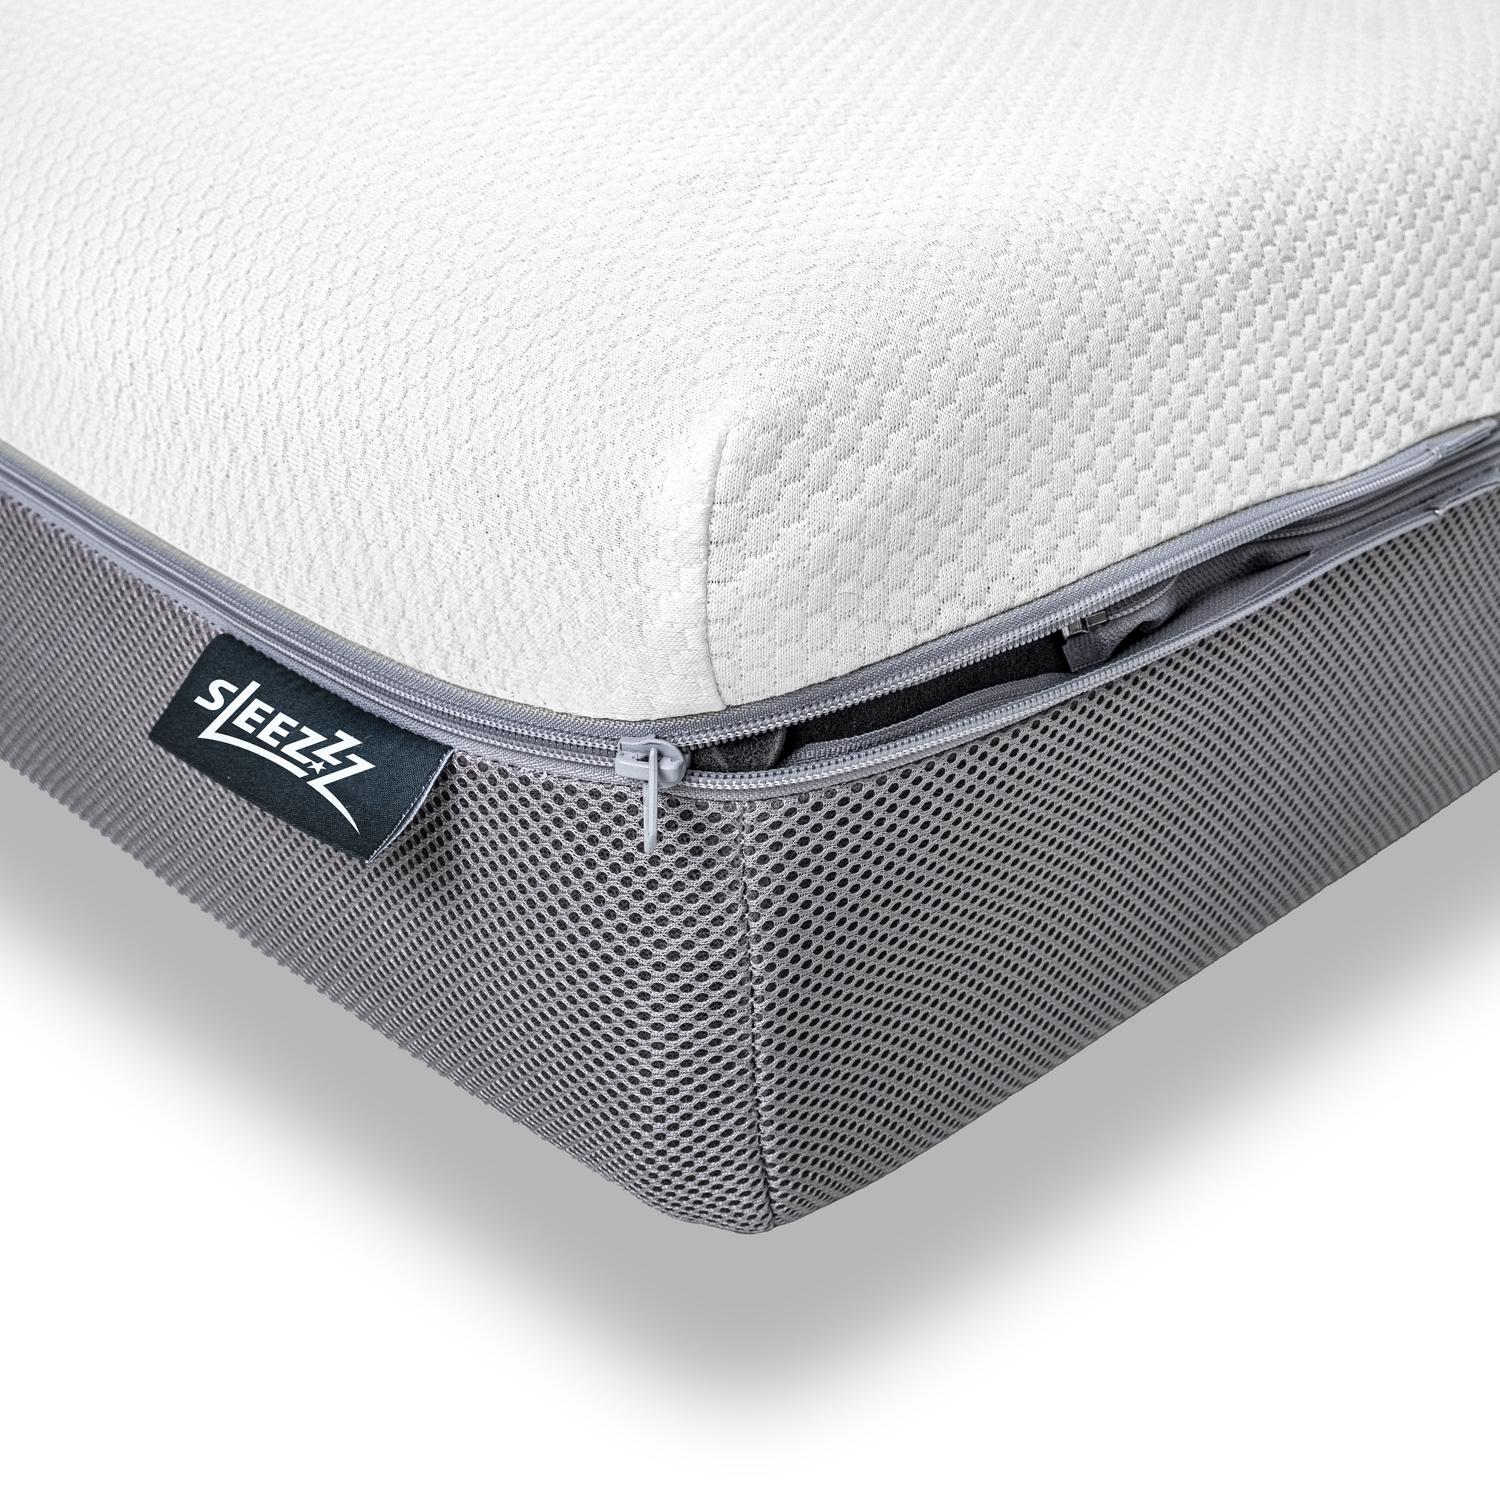 Sleezzz Premium mattress cover 90 x 200 cm, height 20 cm